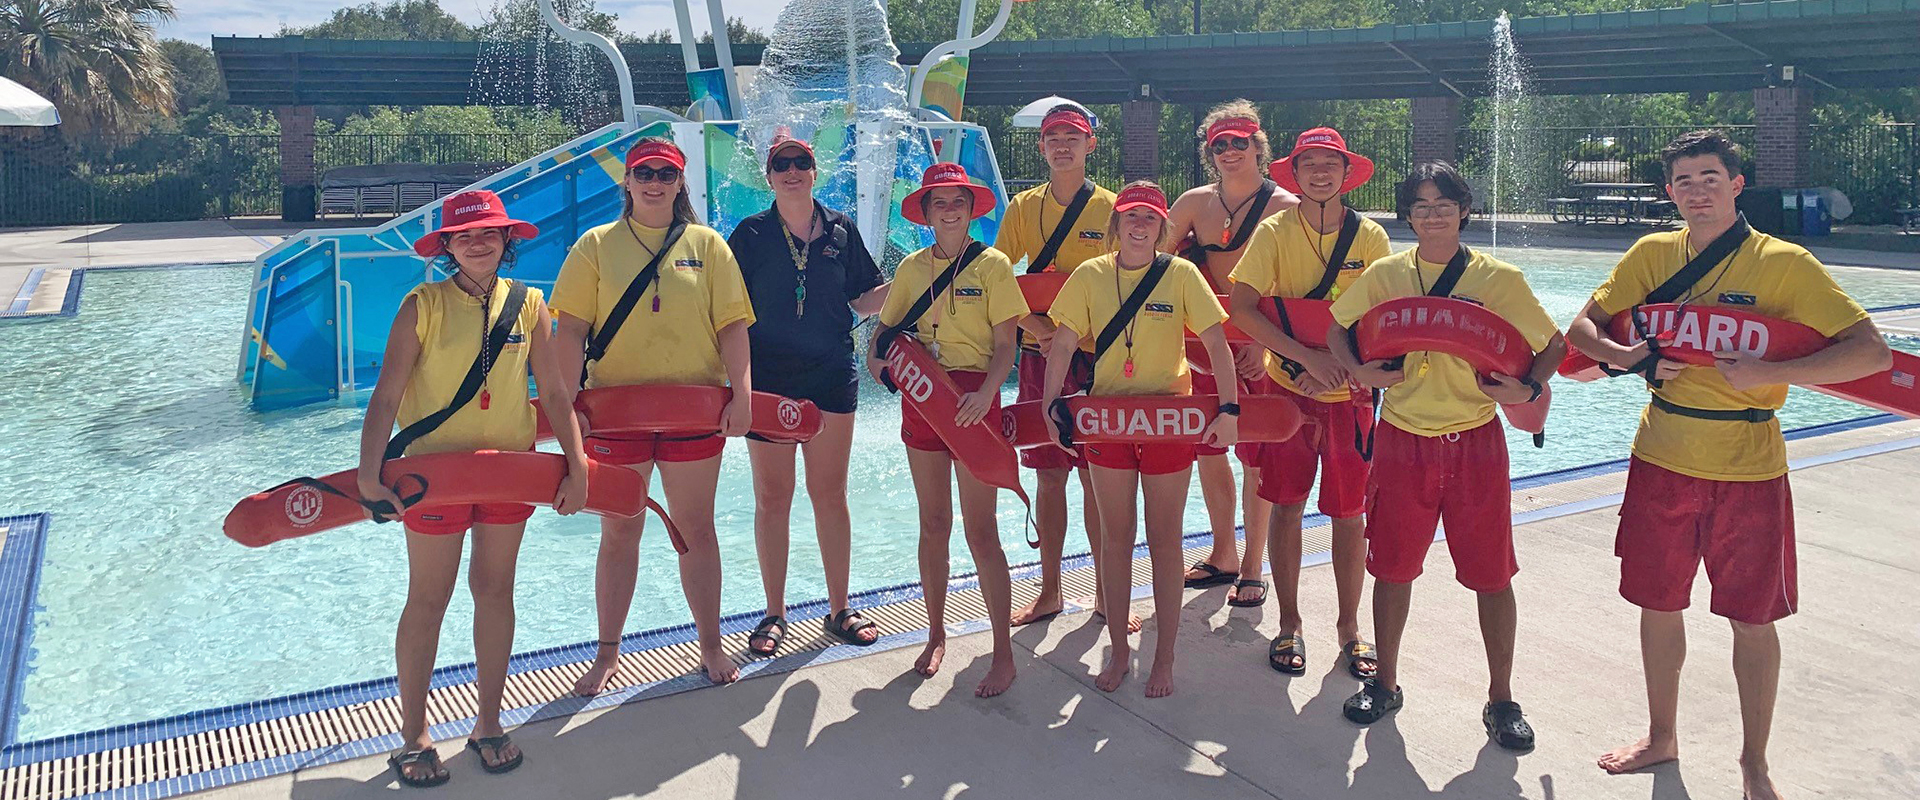 aquatic center lifeguards